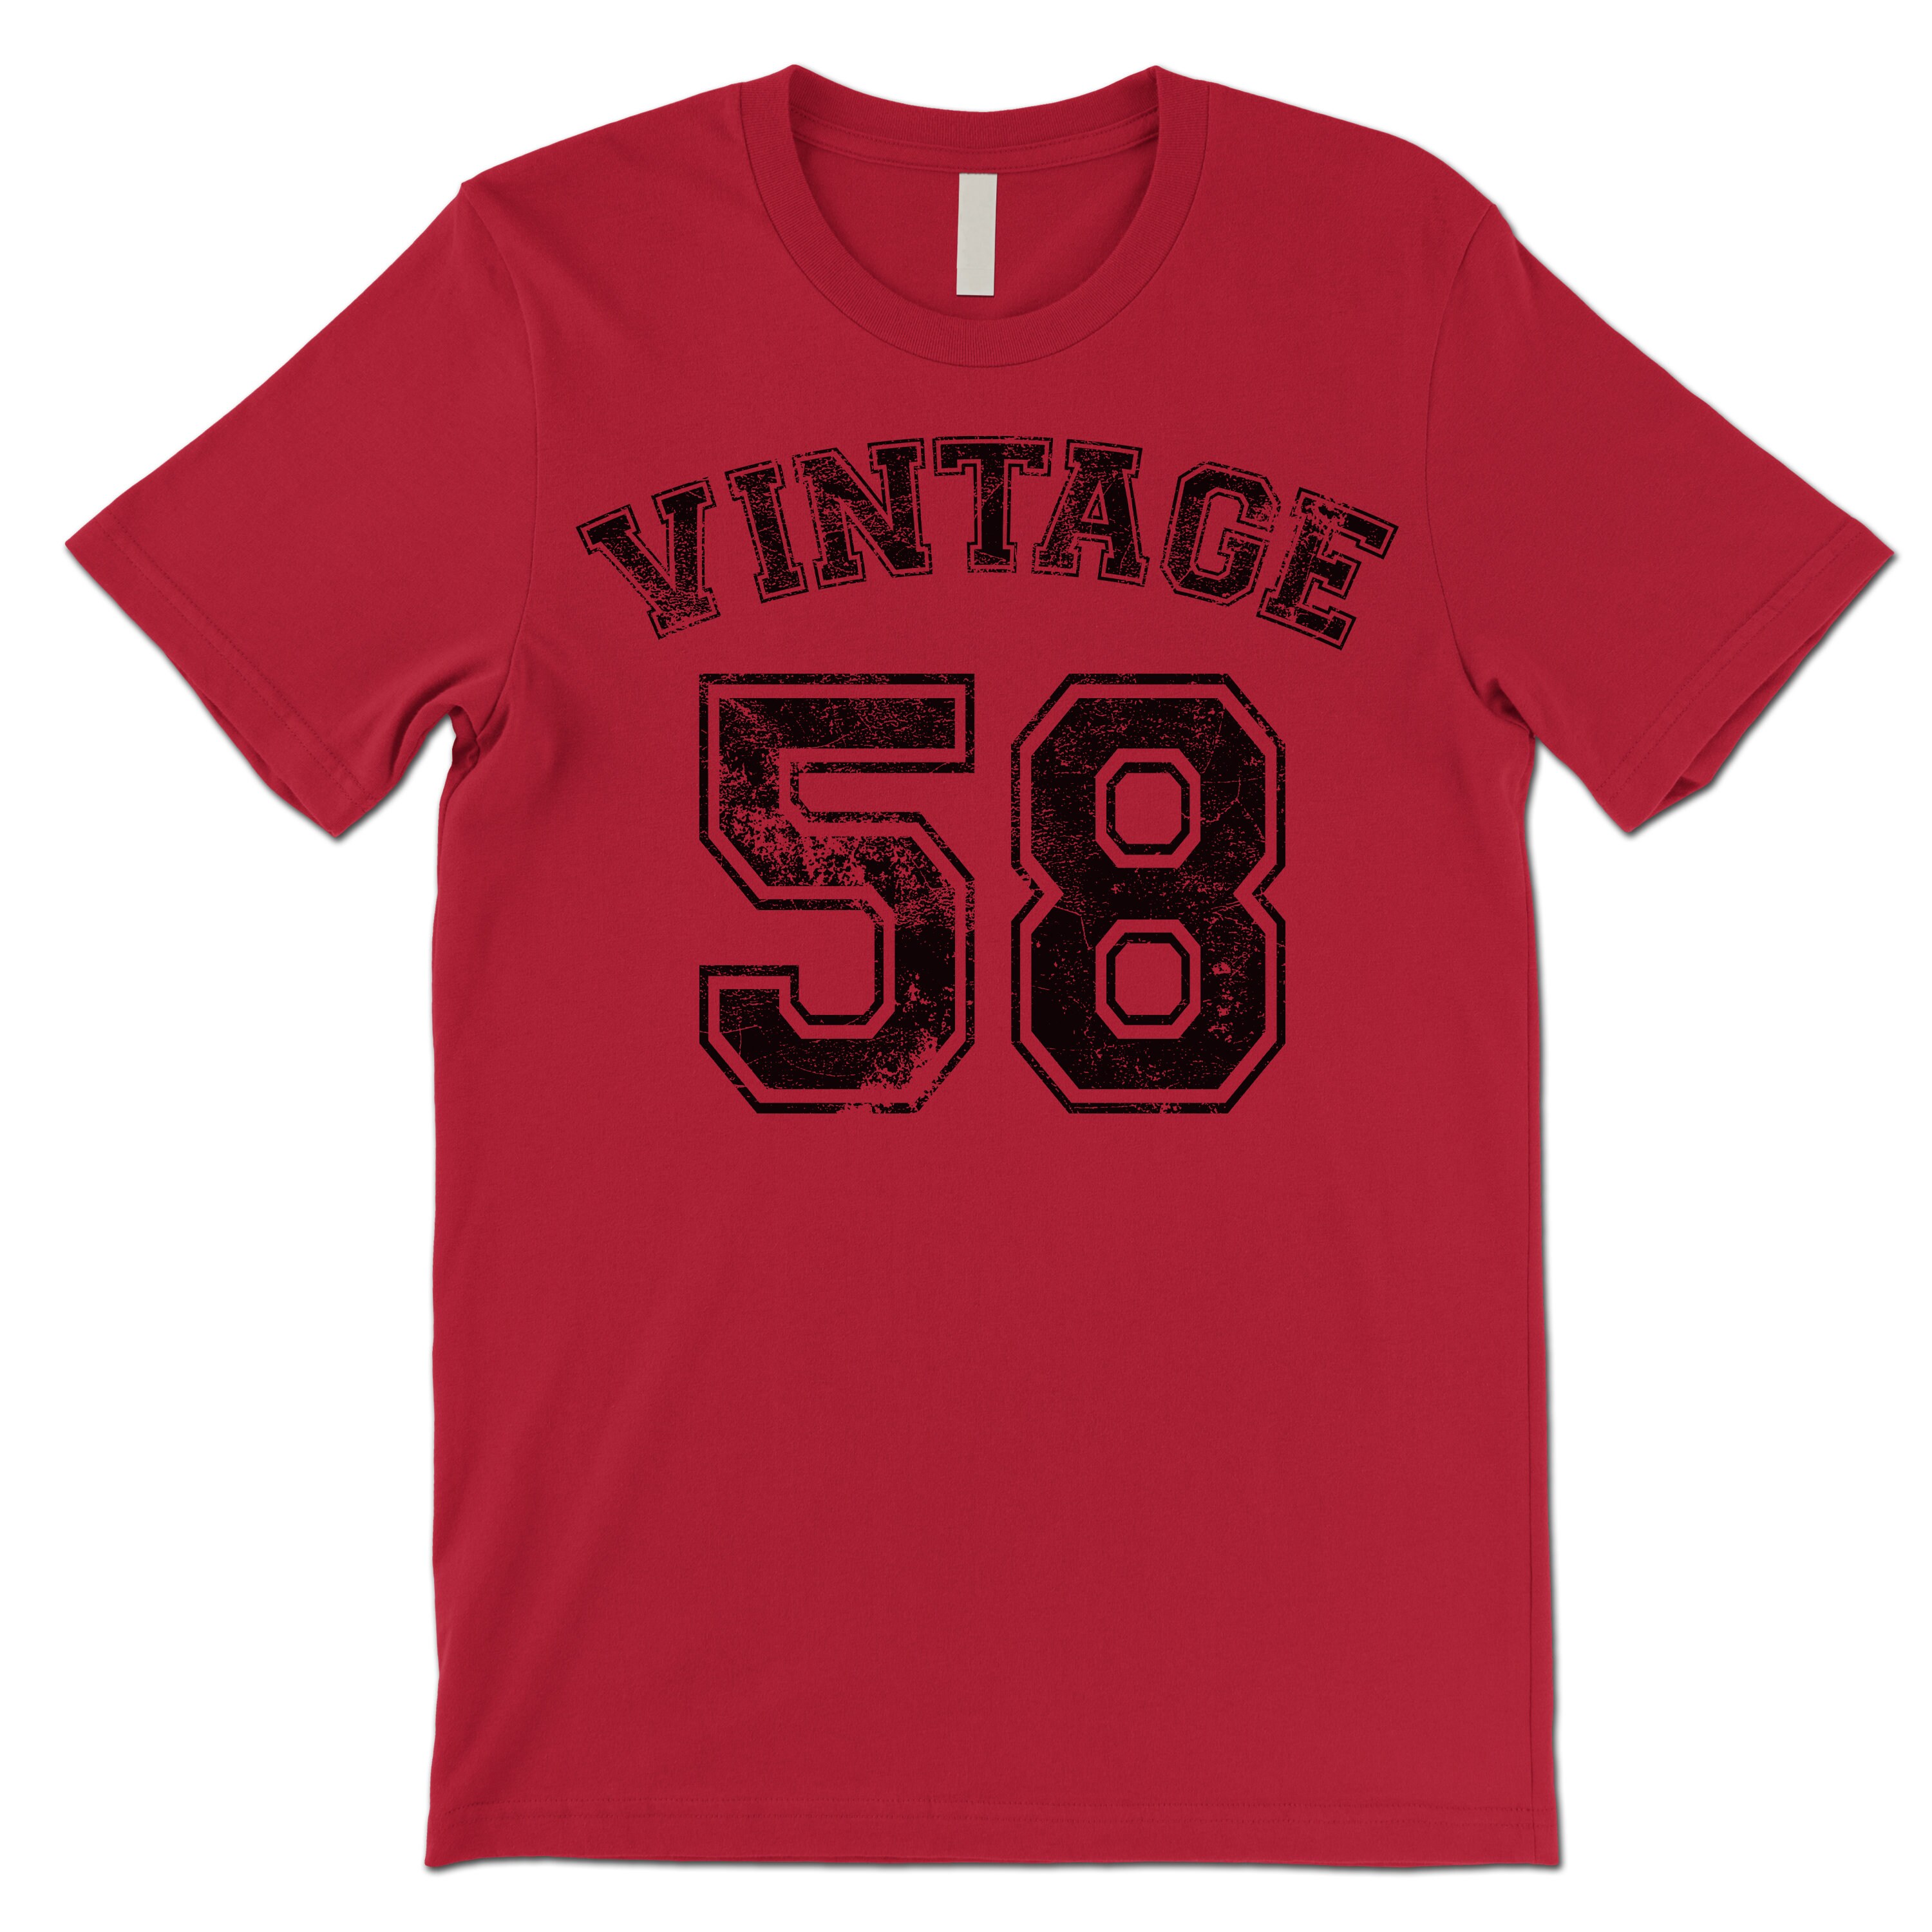 Vintage 1958 Birthday Shirt. Born in the Year 1958 Birthday | Etsy